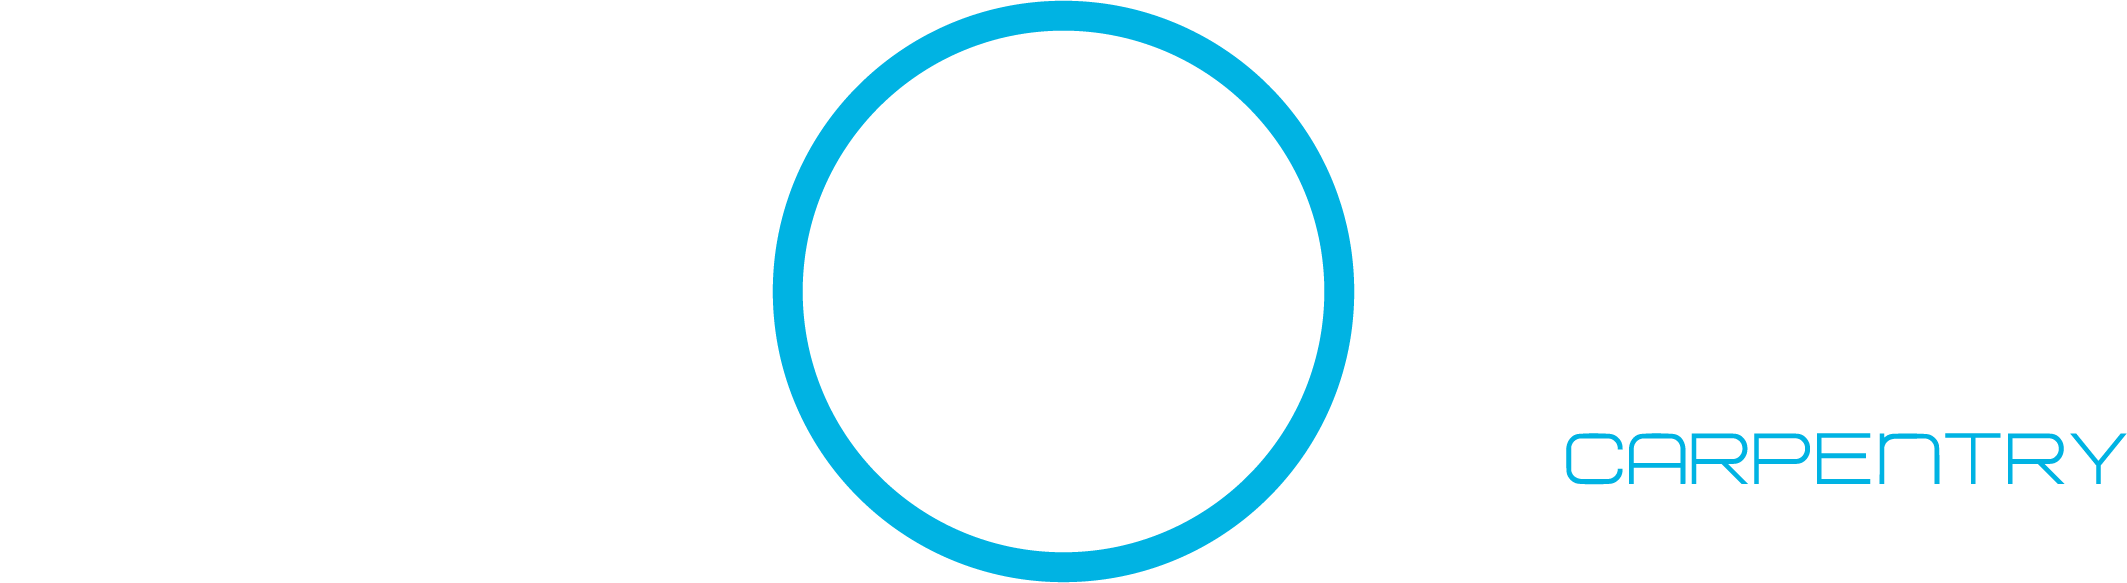 Touchwood Carpentry Perth Logo - Perth (2127x583)